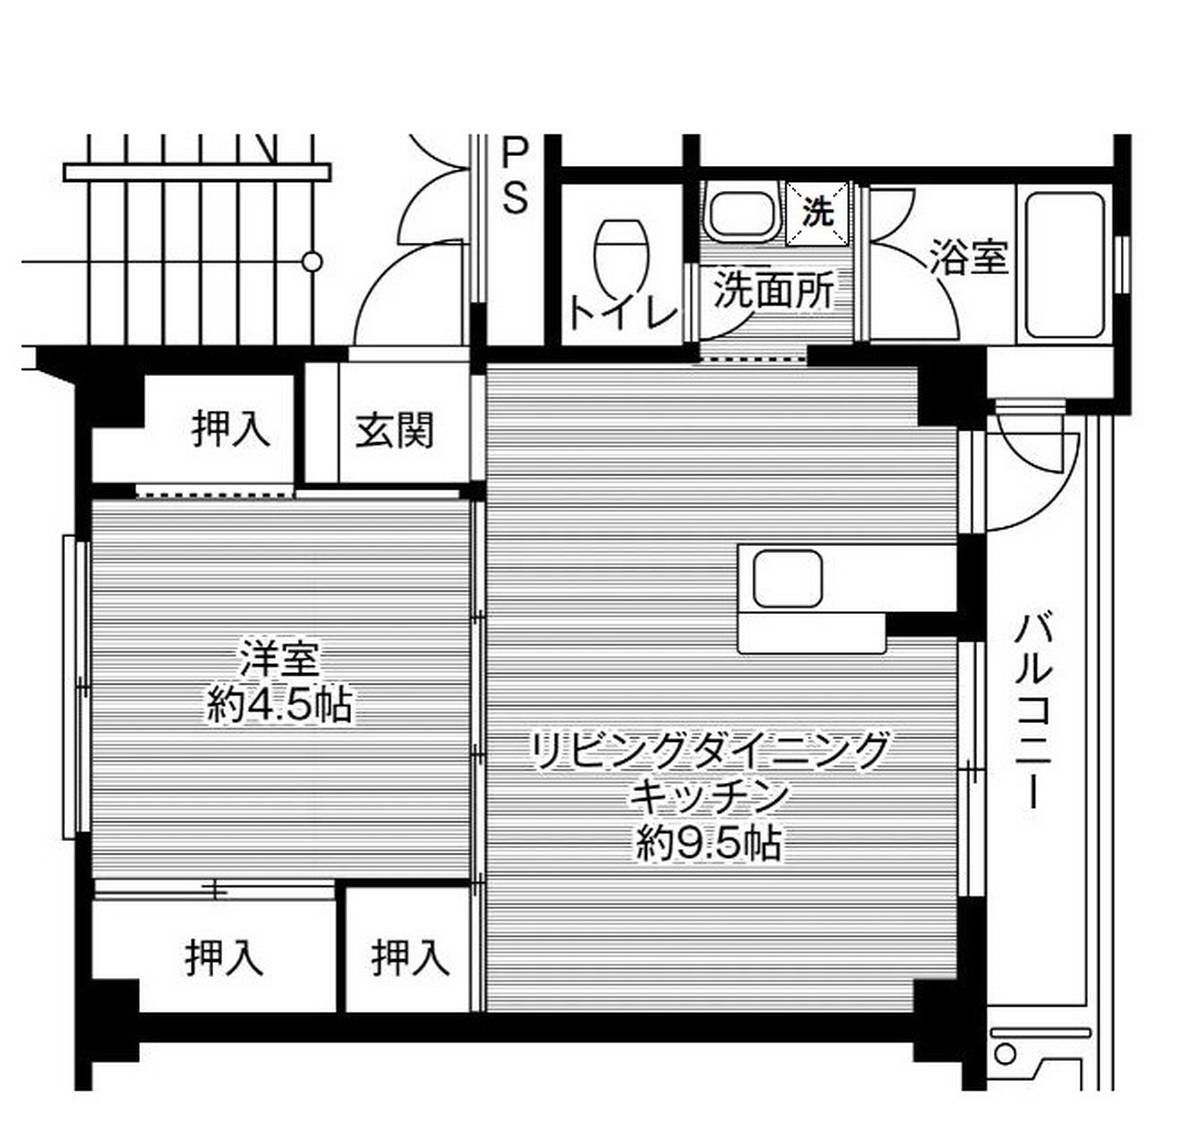 1LDK floorplan of Village House Meinohama in Nishi-ku